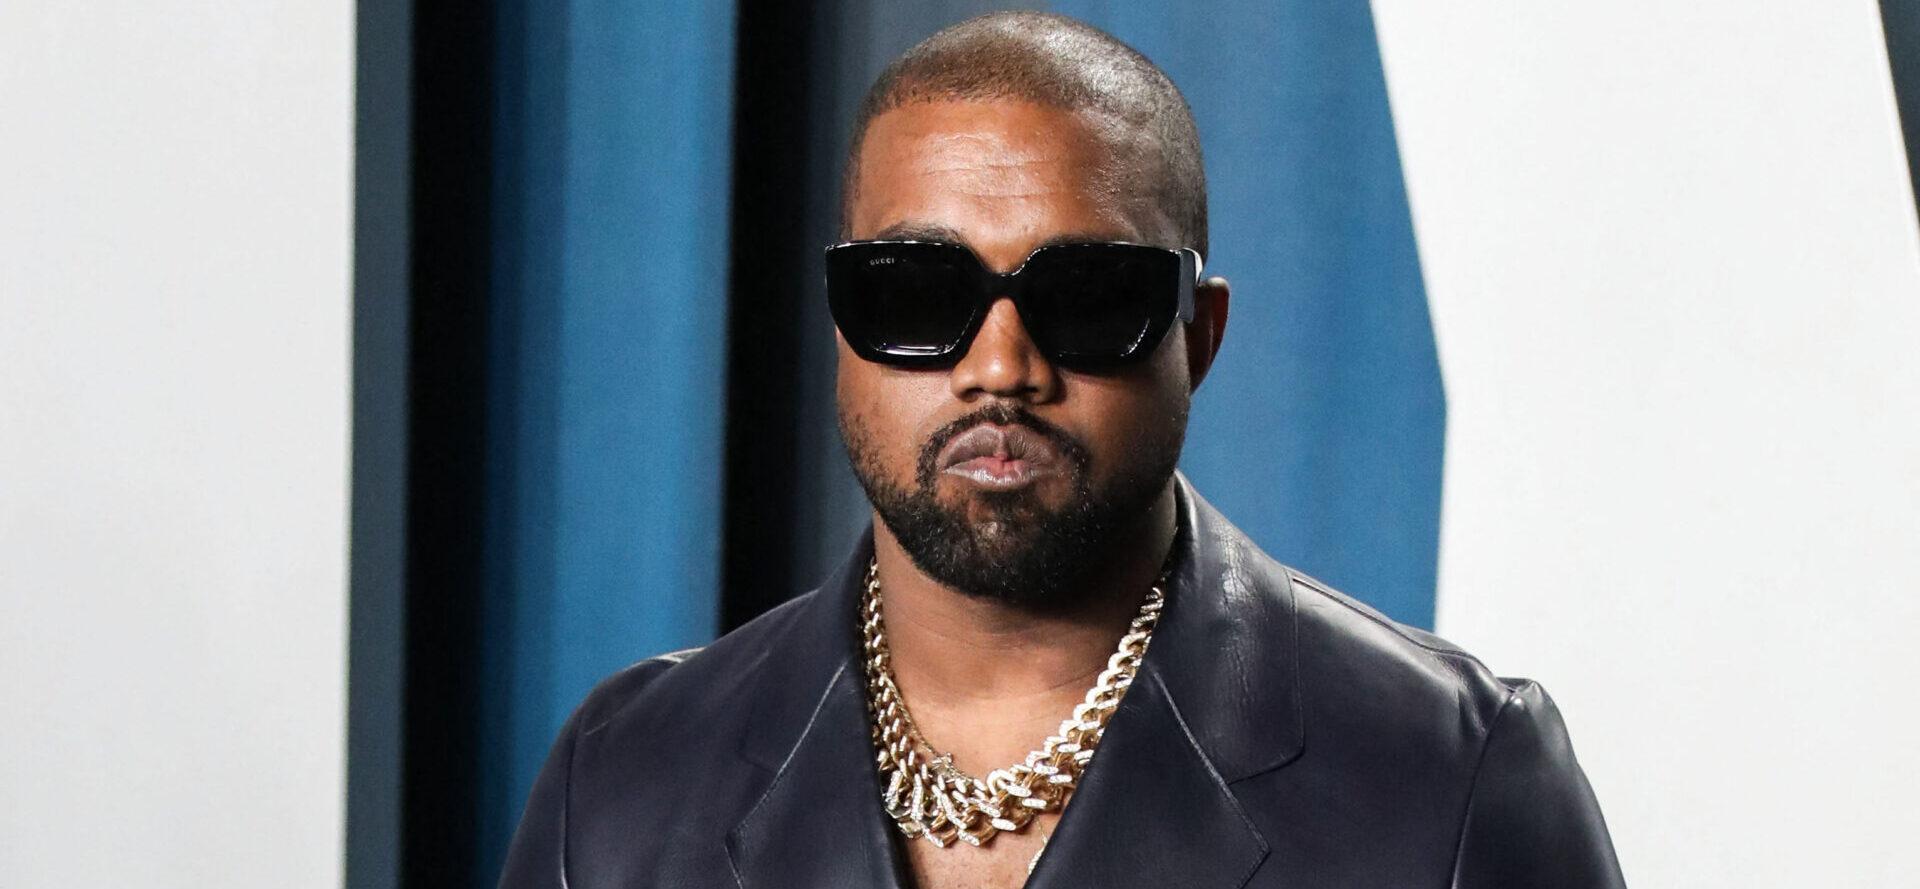 Kanye West Shuts Down His Social Media Accounts Amid Fan Backlash Over ‘Yeezy Porn’